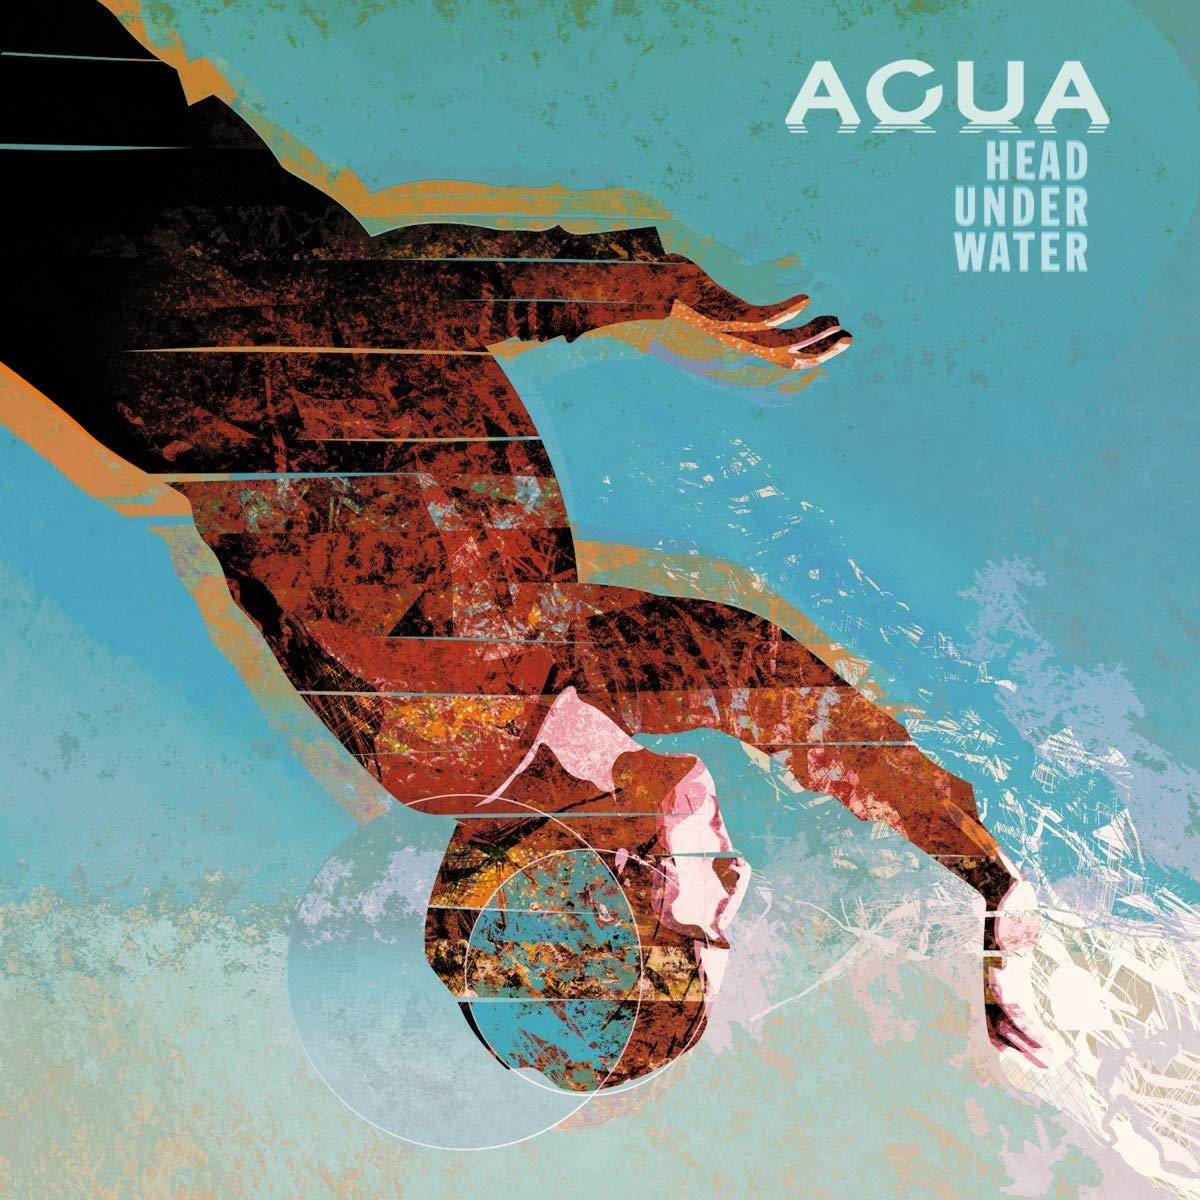 (Vinyl) - - Acua Under Head Water